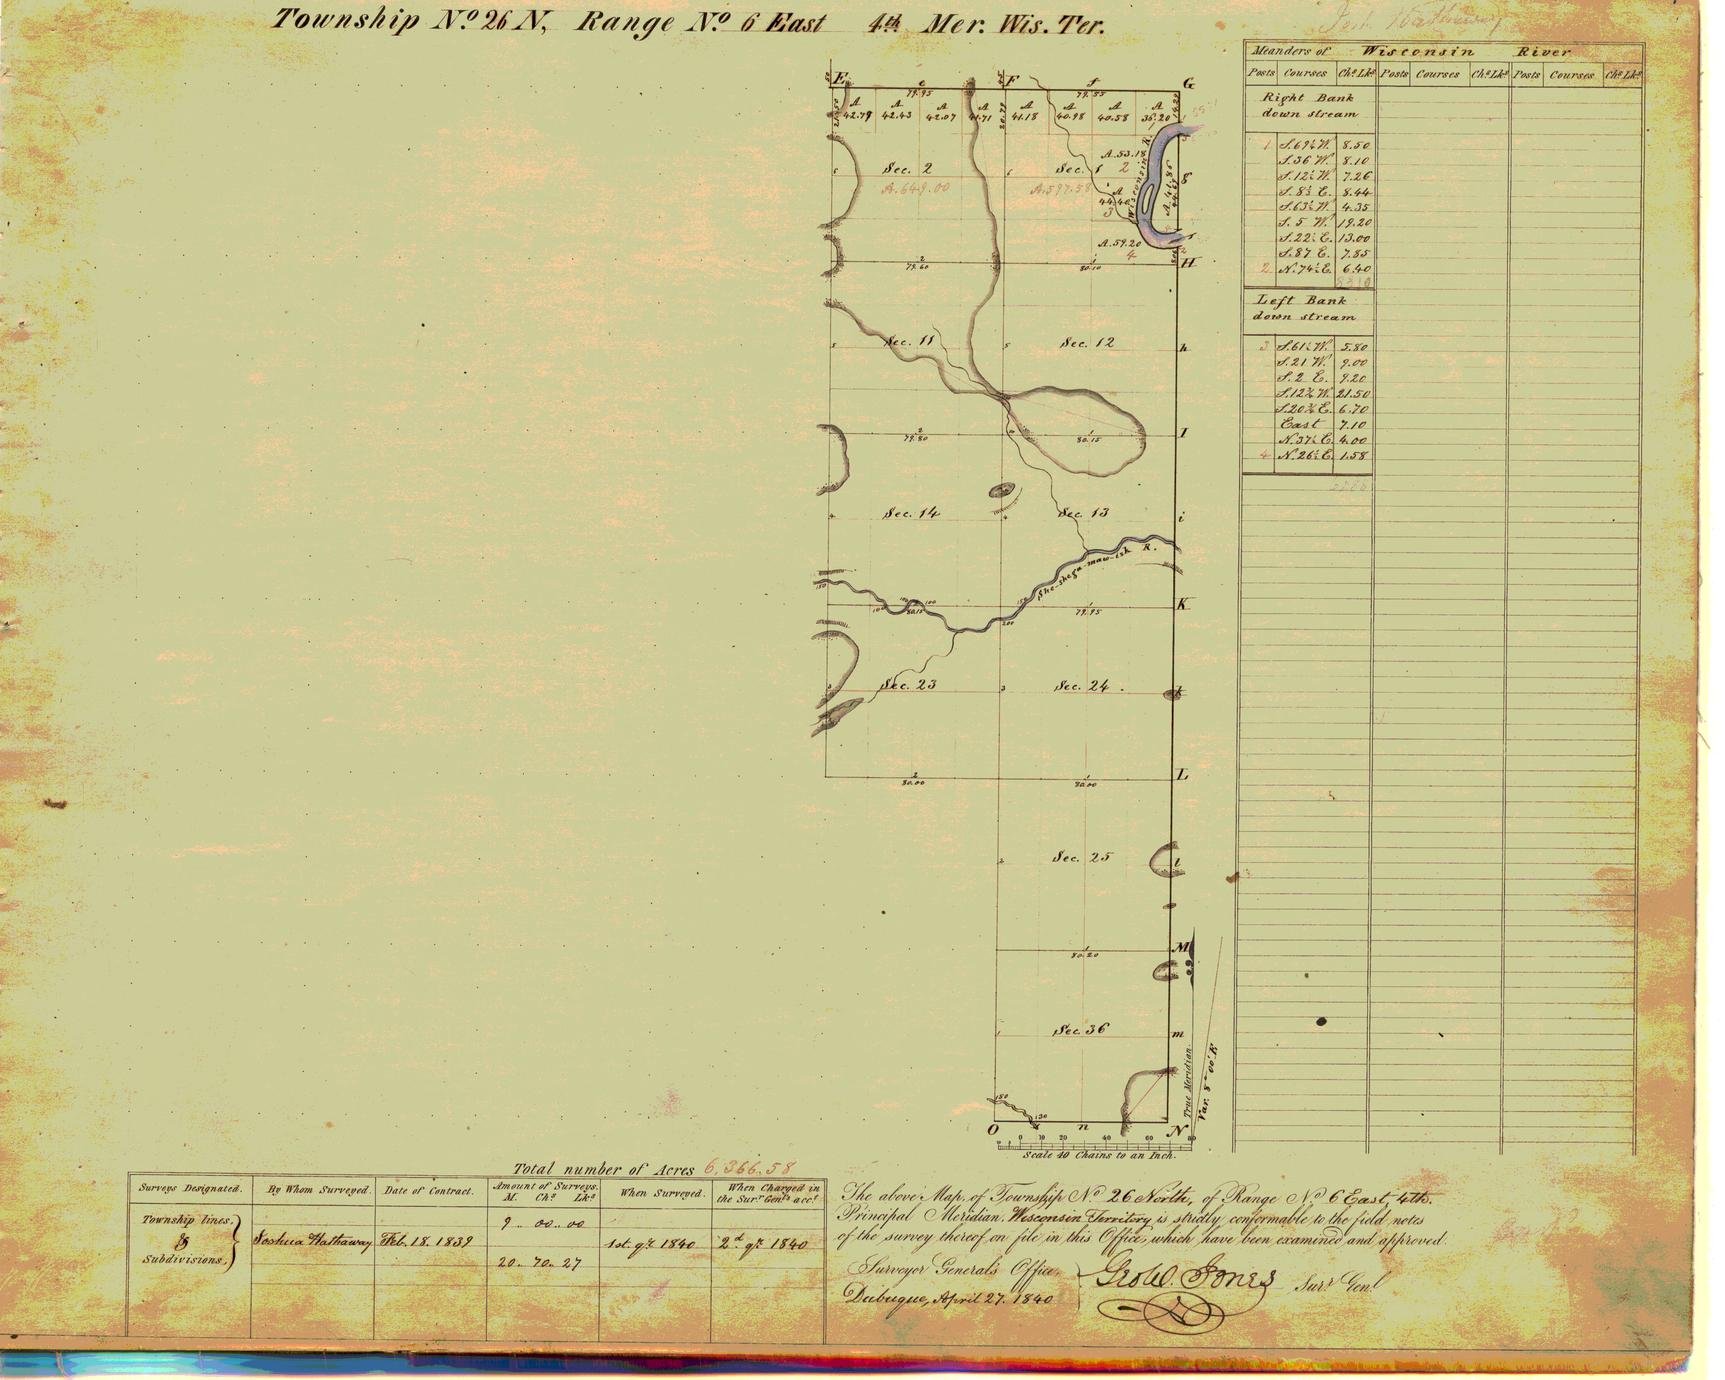 [Public Land Survey System map: Wisconsin Township 26 North, Range 06 East]